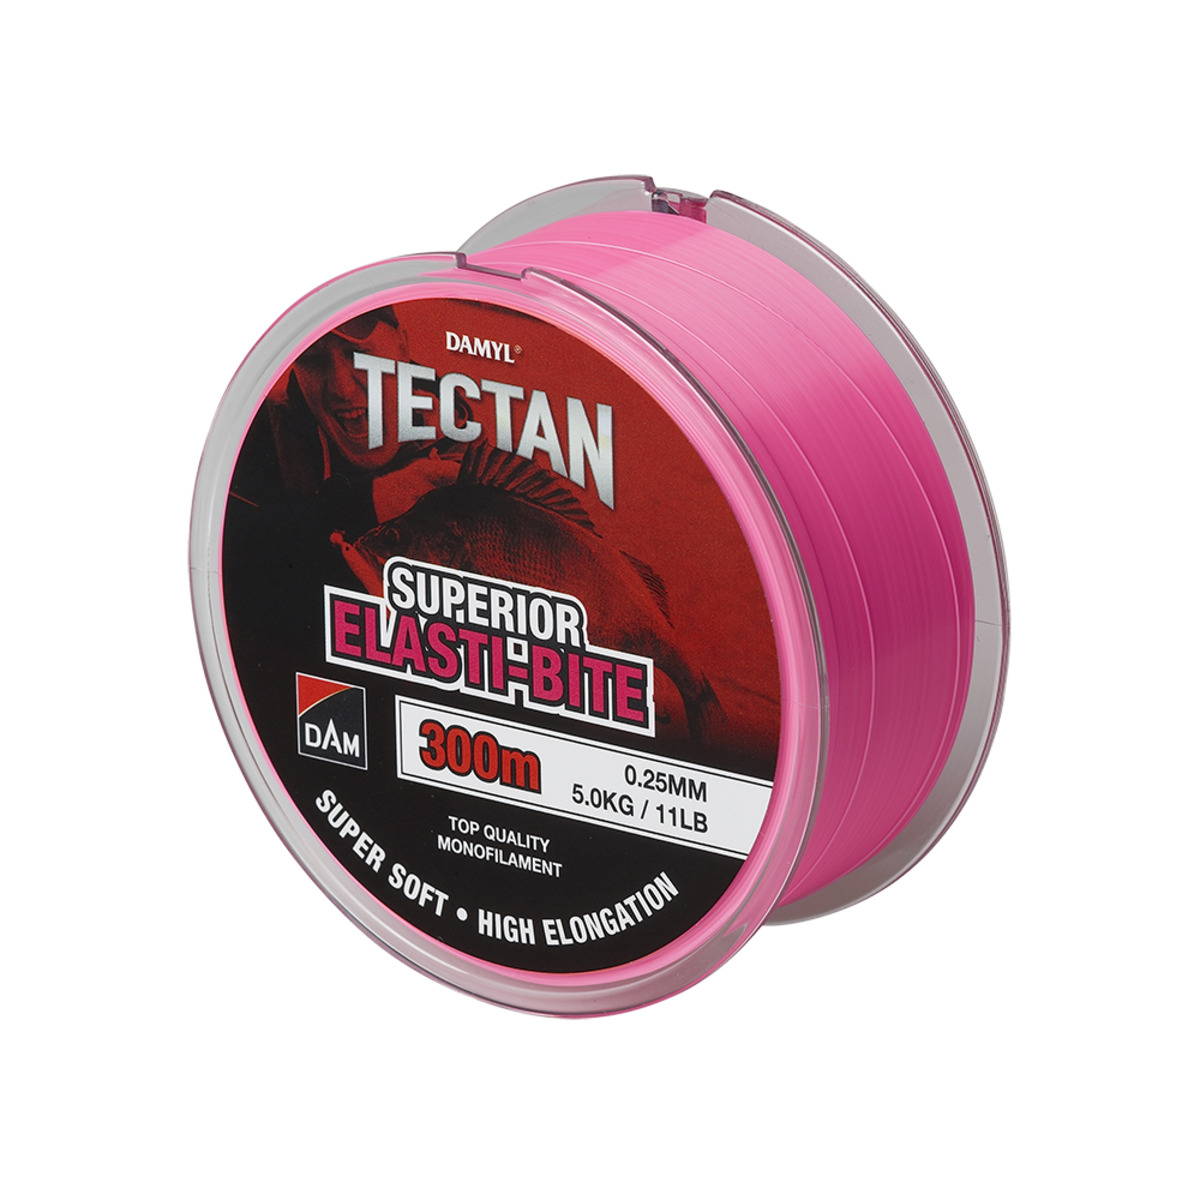 Dam Tectan Superior Elasti-bite 300m - 0.20MM 3KG 6.6LBS PINK